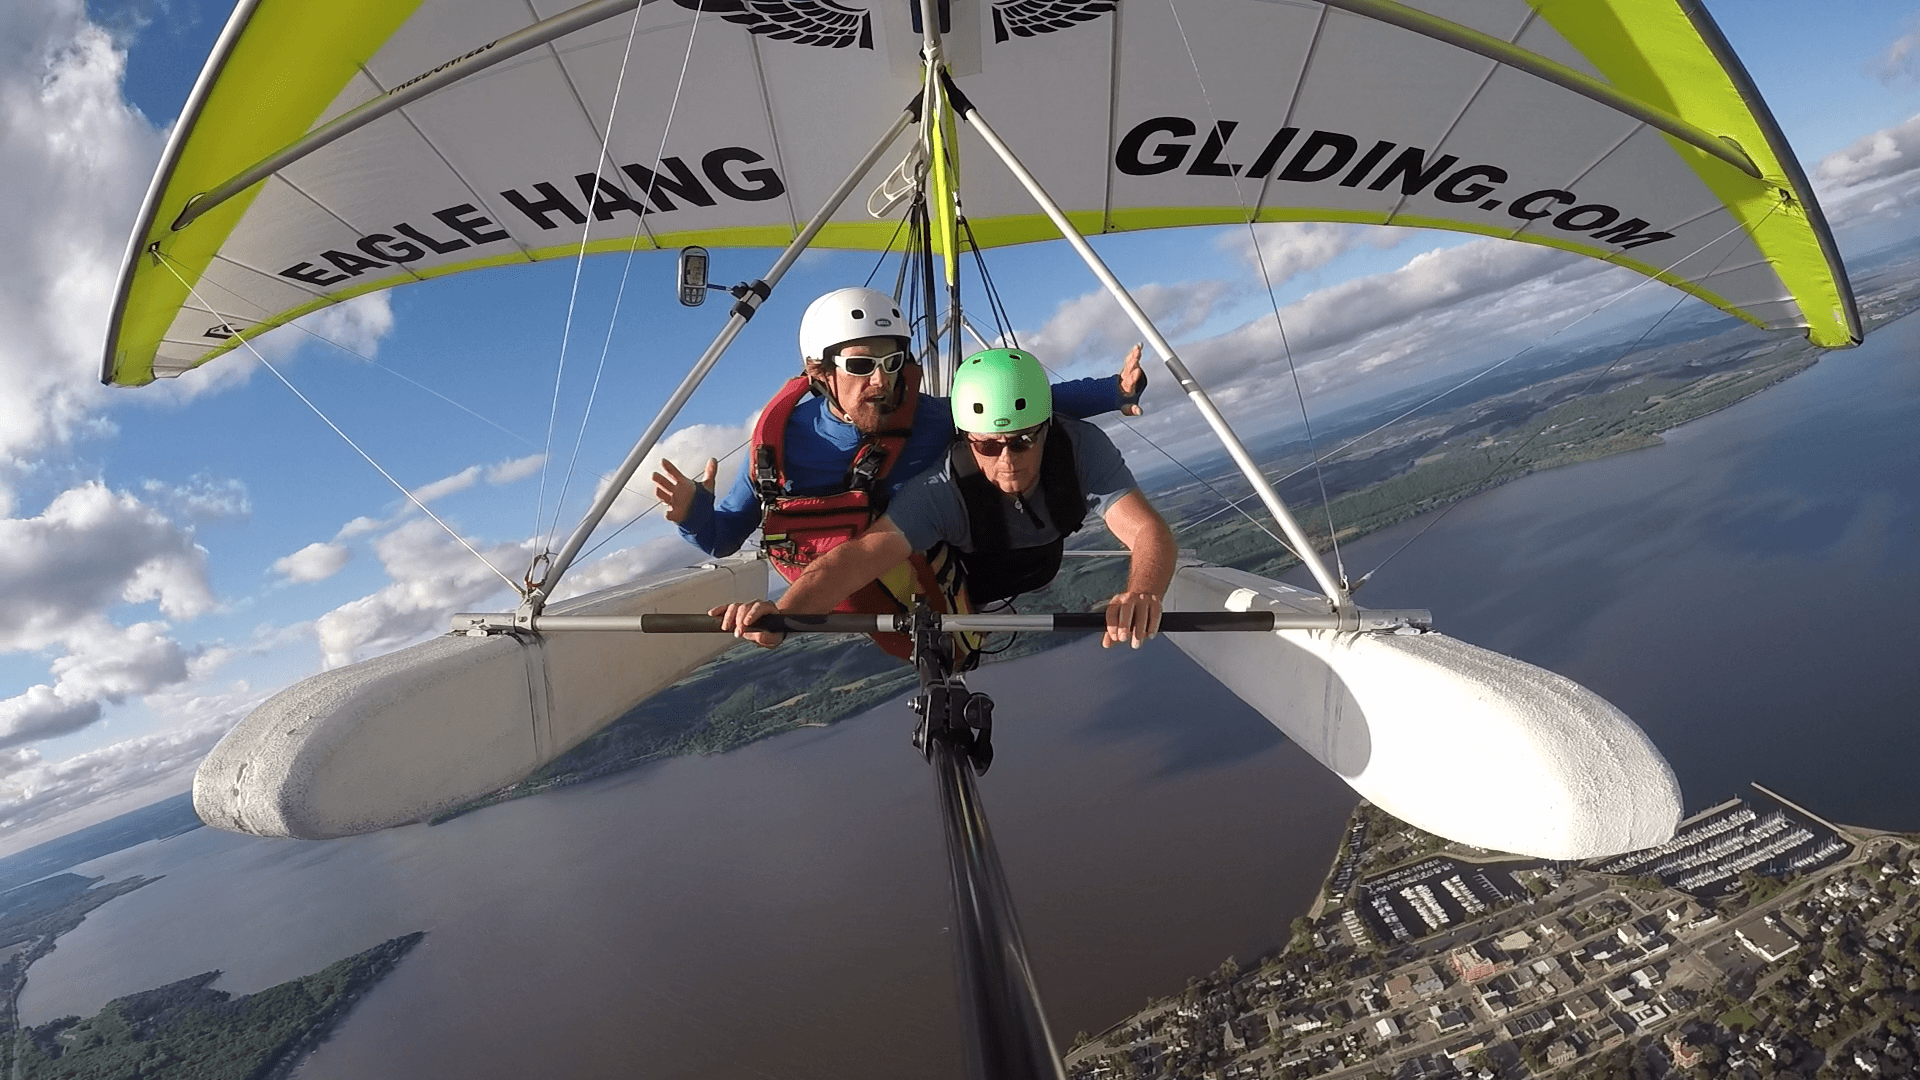 Eagle Hang Gliding Recreational Activities